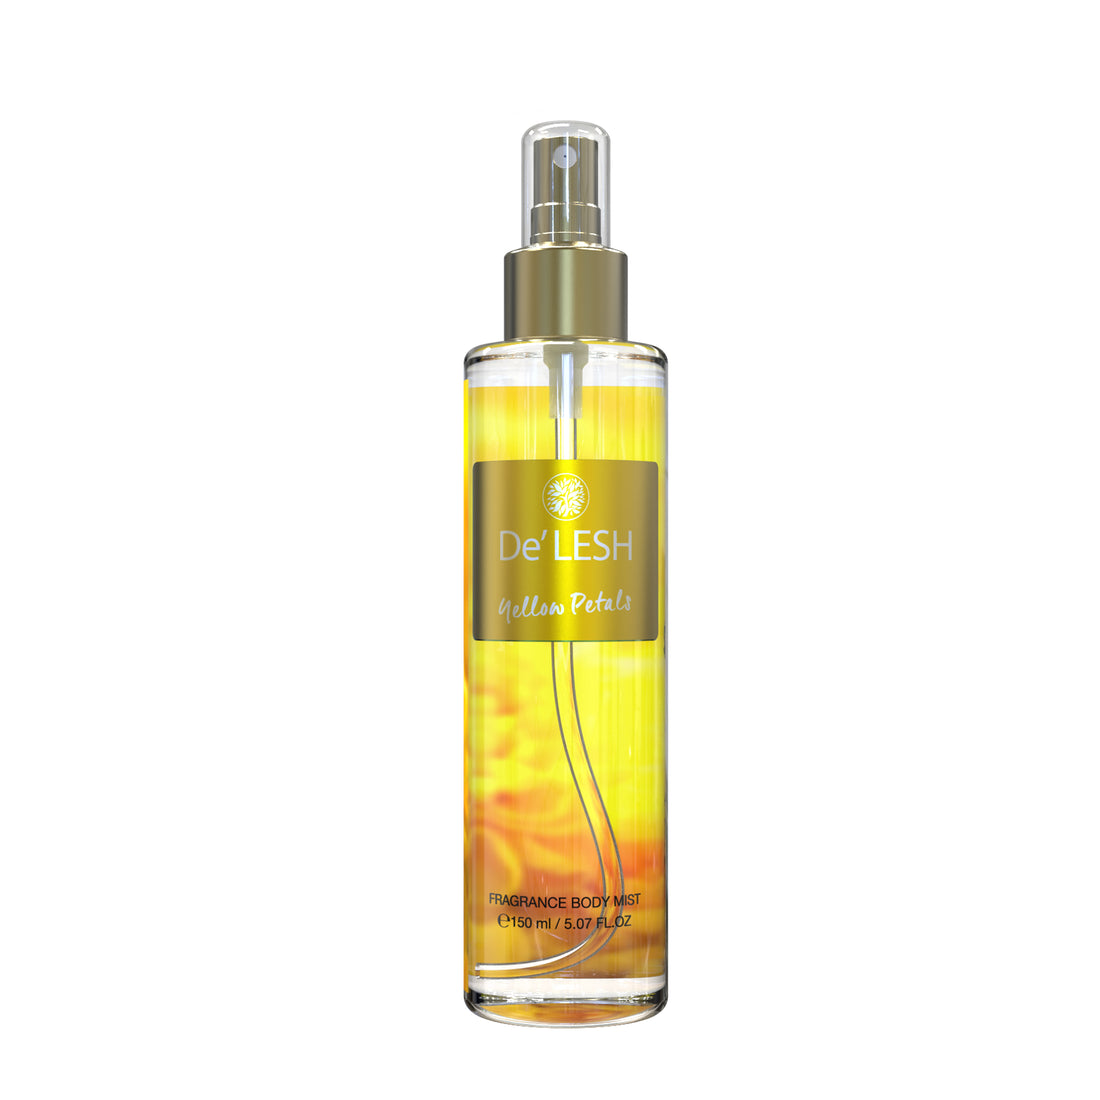 Delesh Yellow Petals Fragrance Body Mist